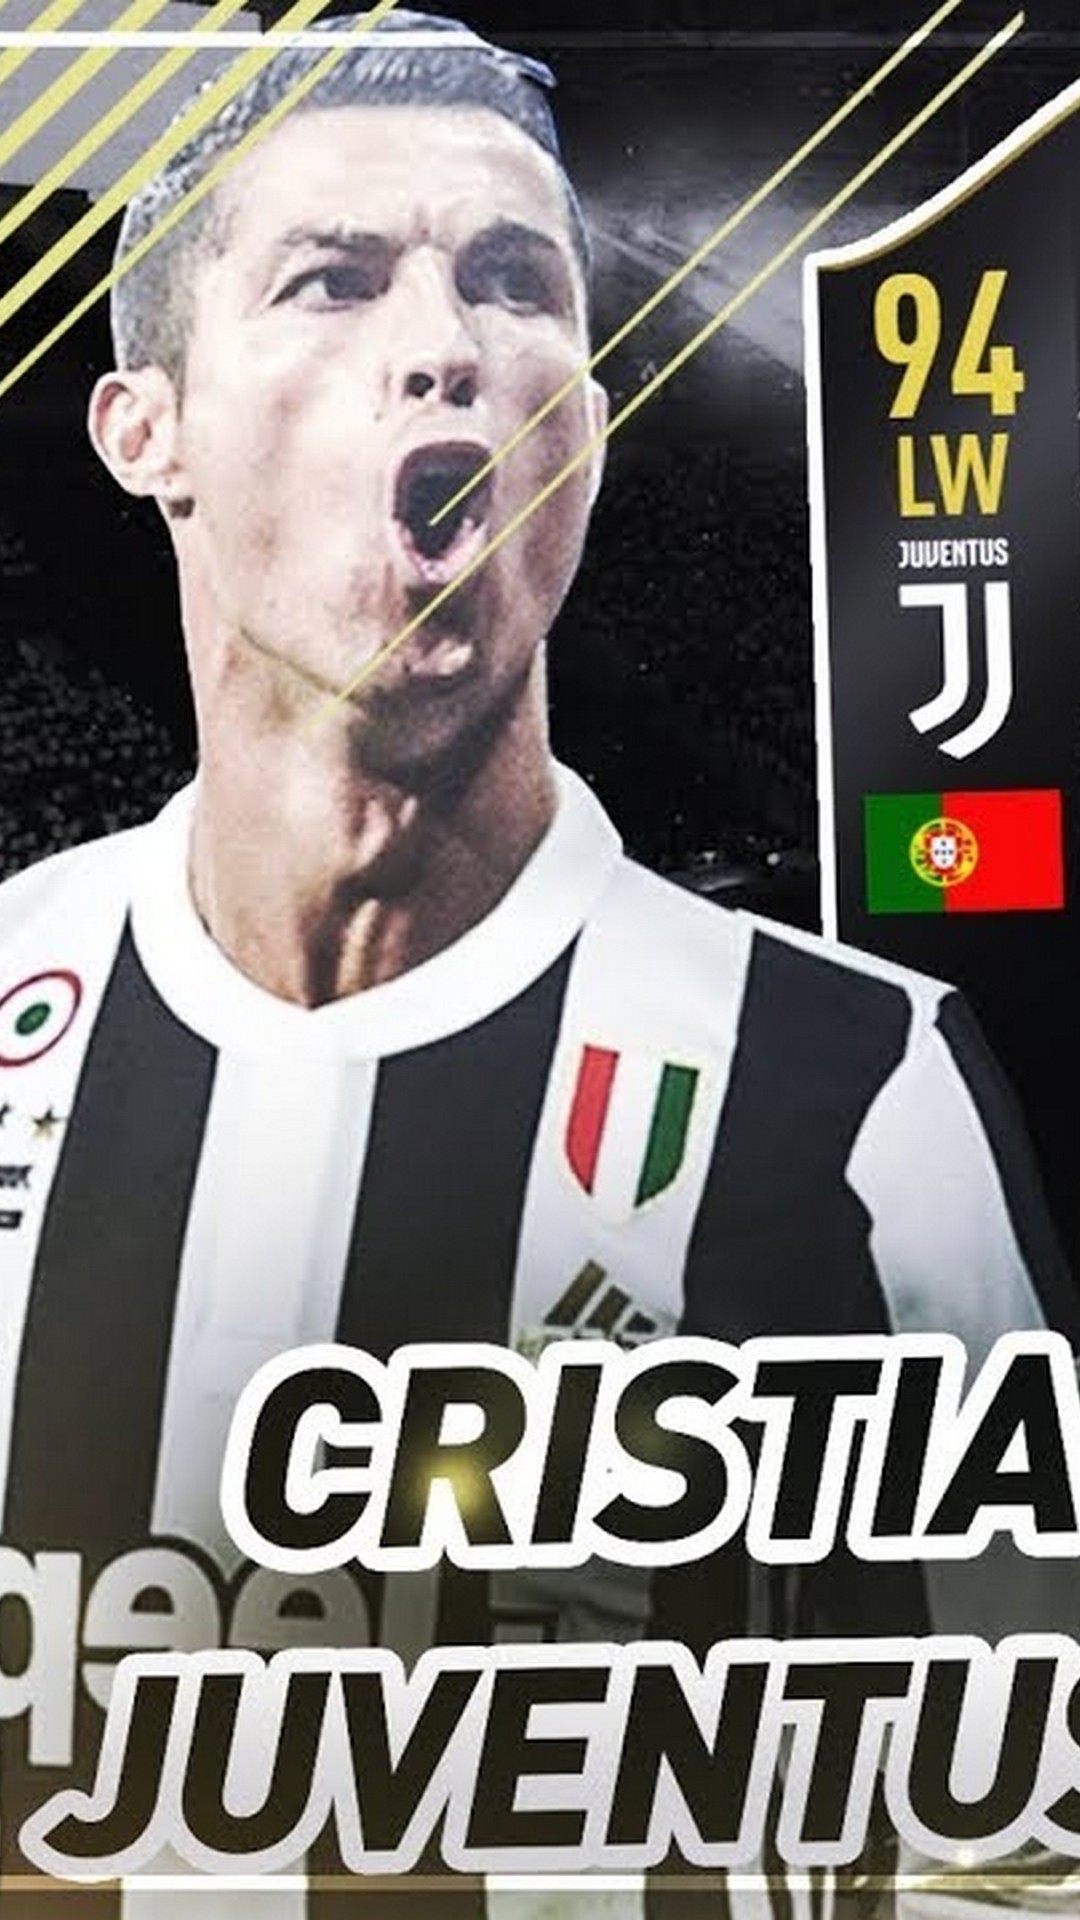 Cristiano Ronaldo Juventus Wallpaper For Android With - Download Wallpaper Ronaldo Juventus - HD Wallpaper 